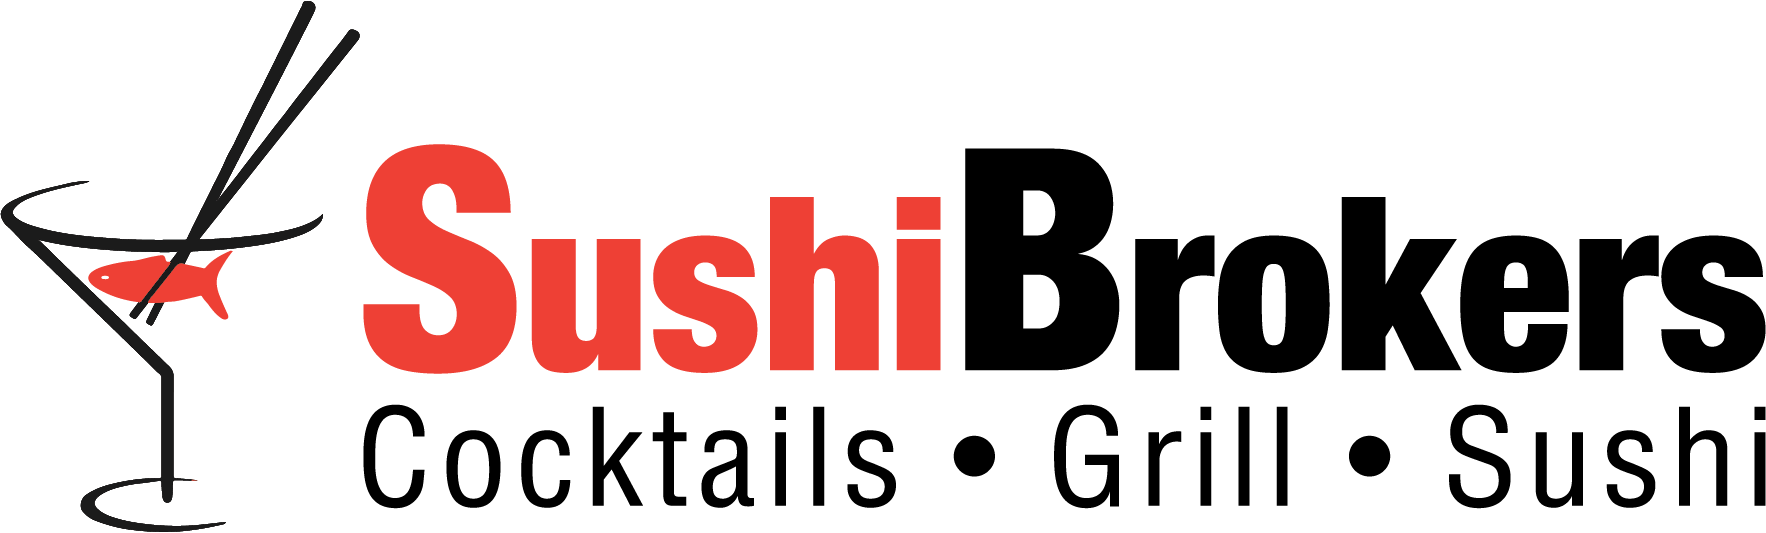 Sushi Brokers - PHOENIX (ARCADIA) Online Ordering